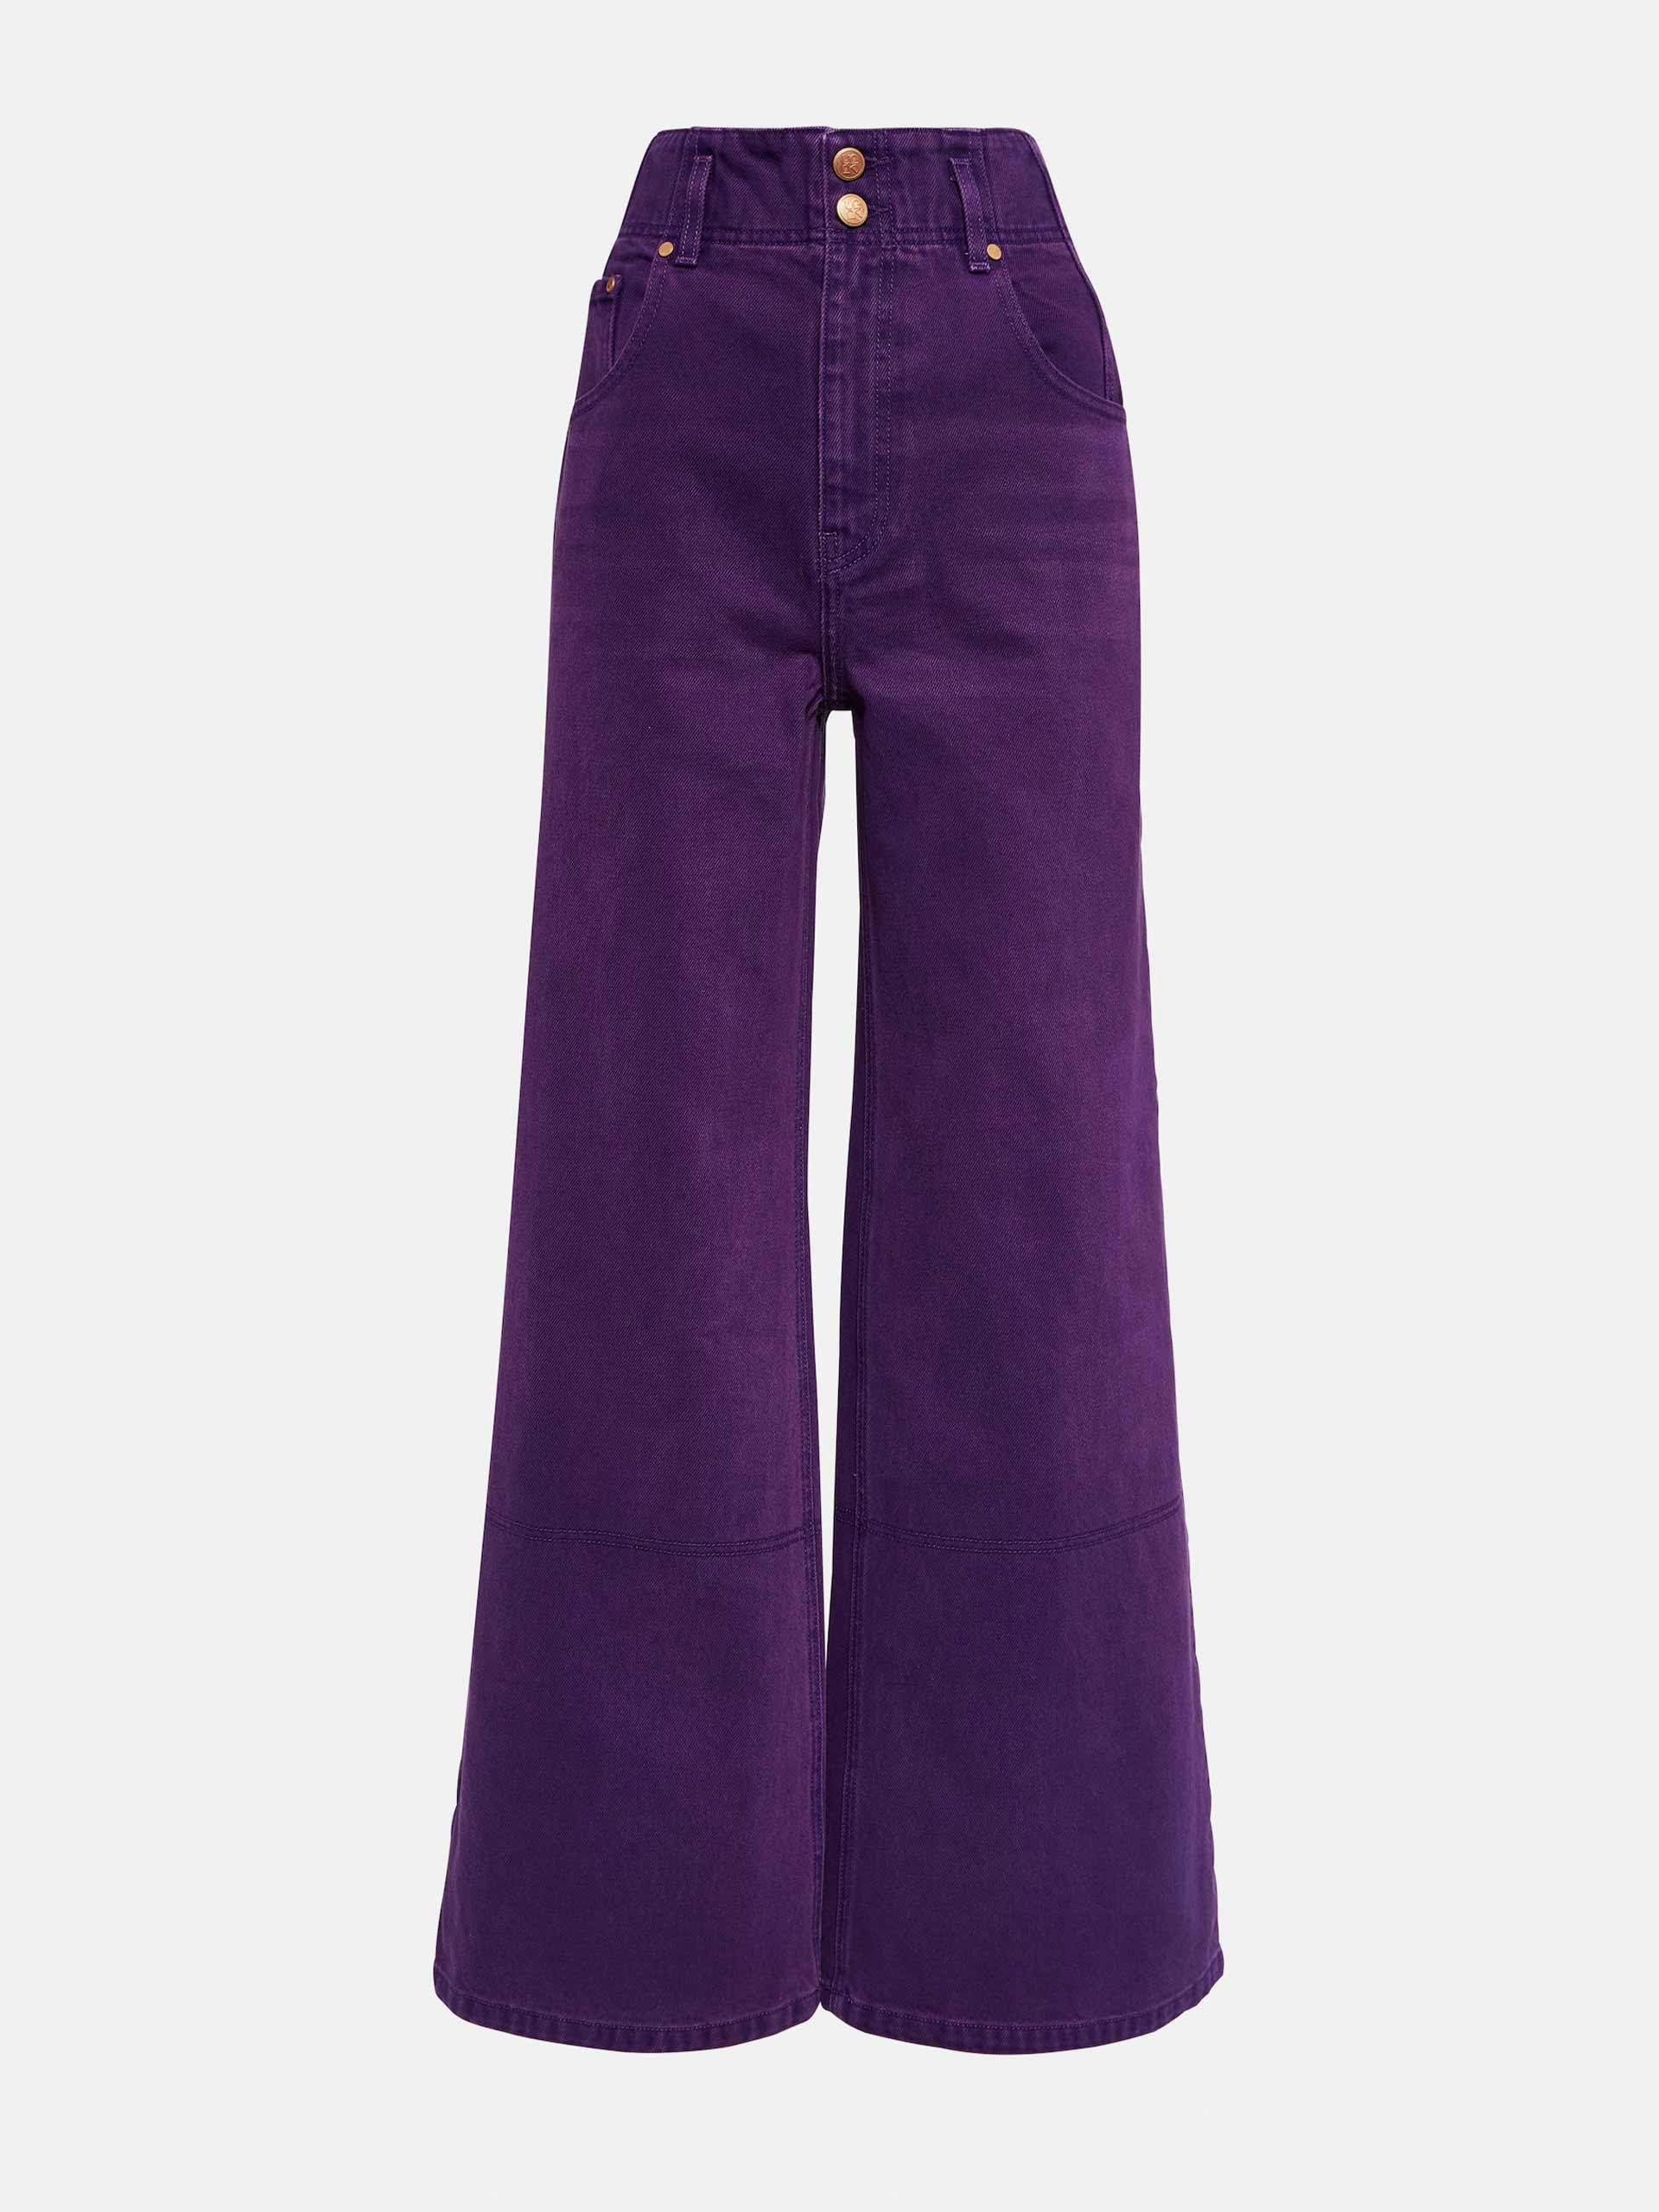 Purple high-rise wide-leg jeans